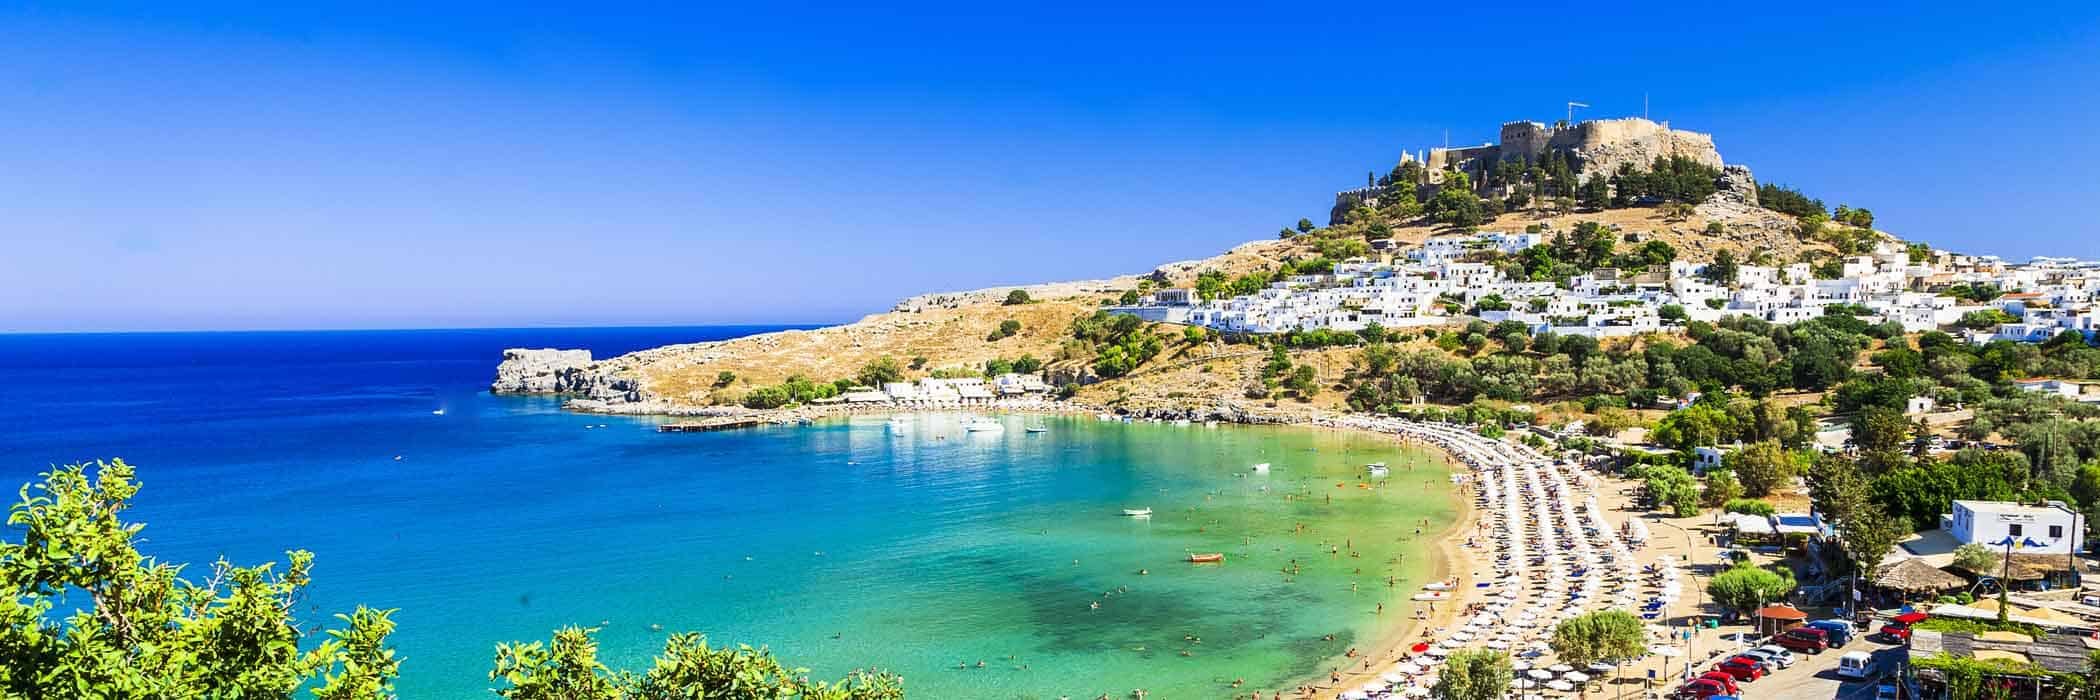 Lindos Beach Rhodes - Top Holiday Destinations